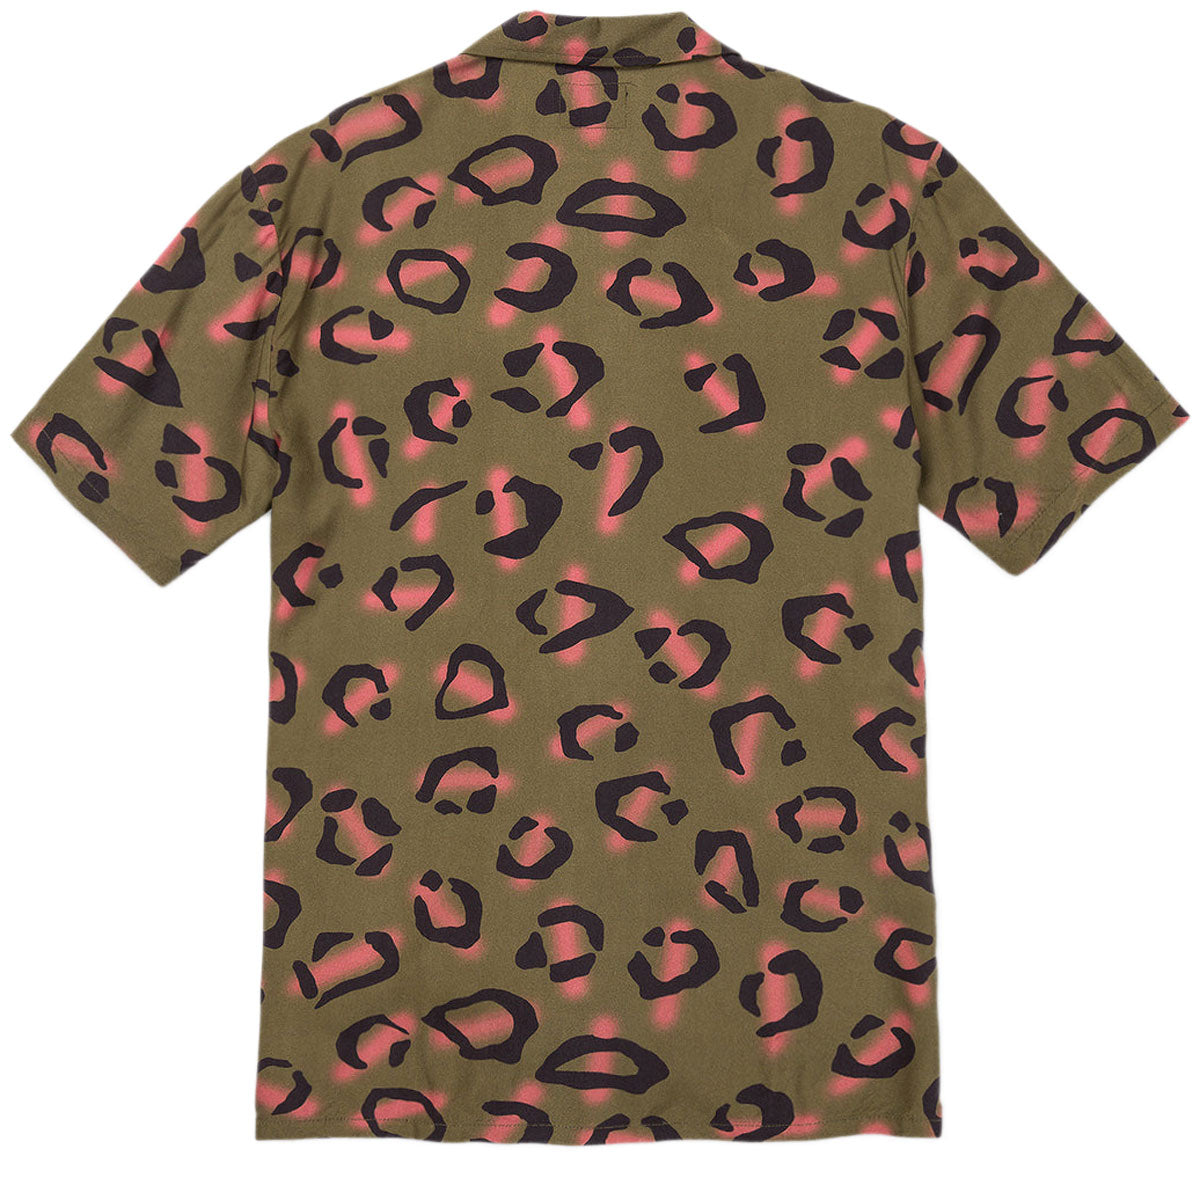 Volcom Stone Party Animals Shirt - Military image 4